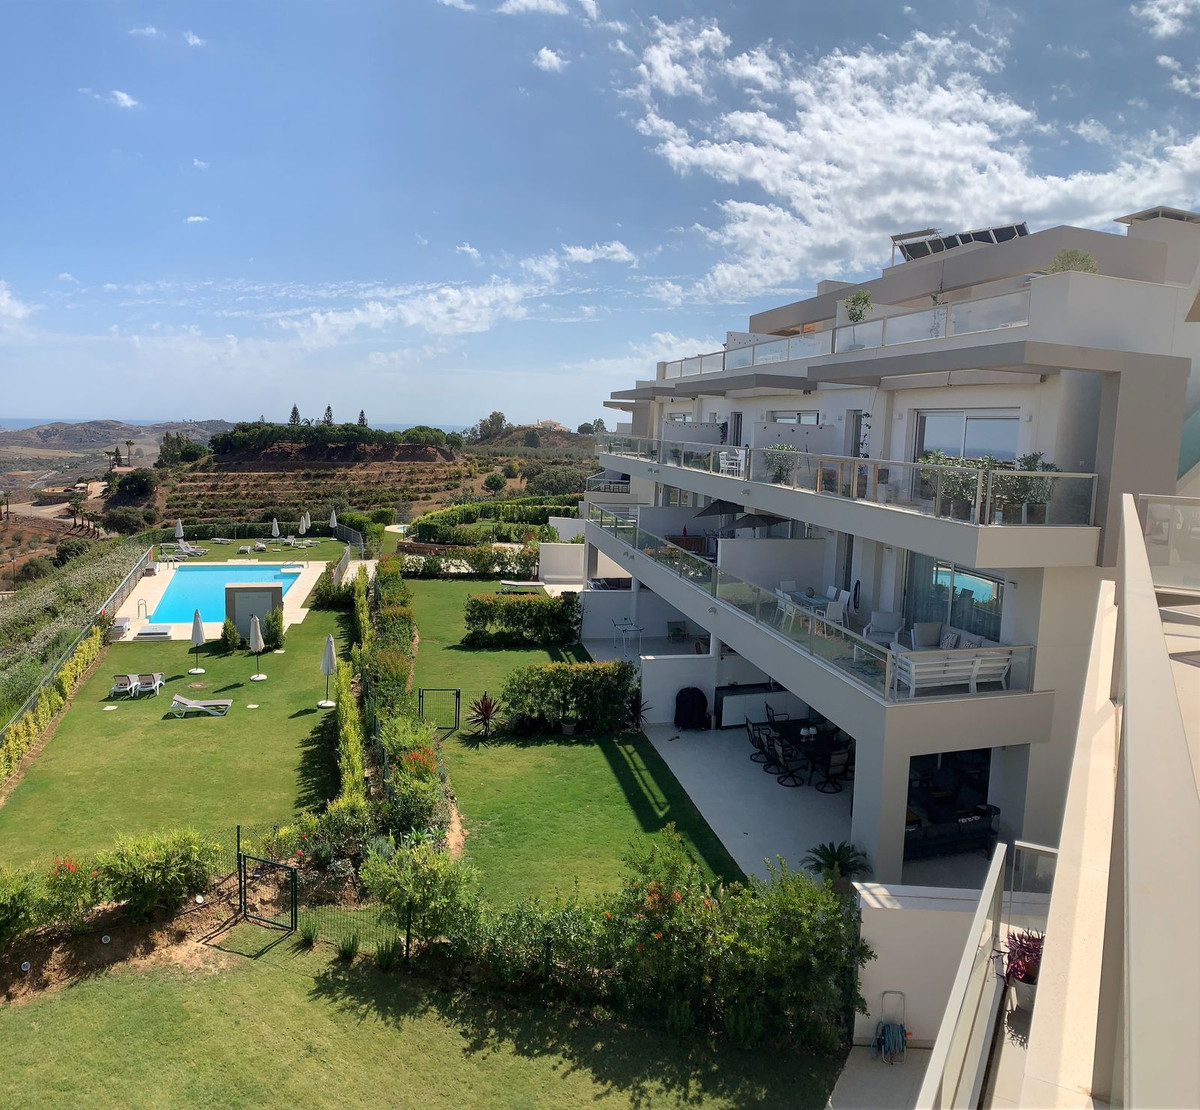 Penthouse in La Cala de Mijas, Costa del Sol, Málaga on Costa del Sol Till salu